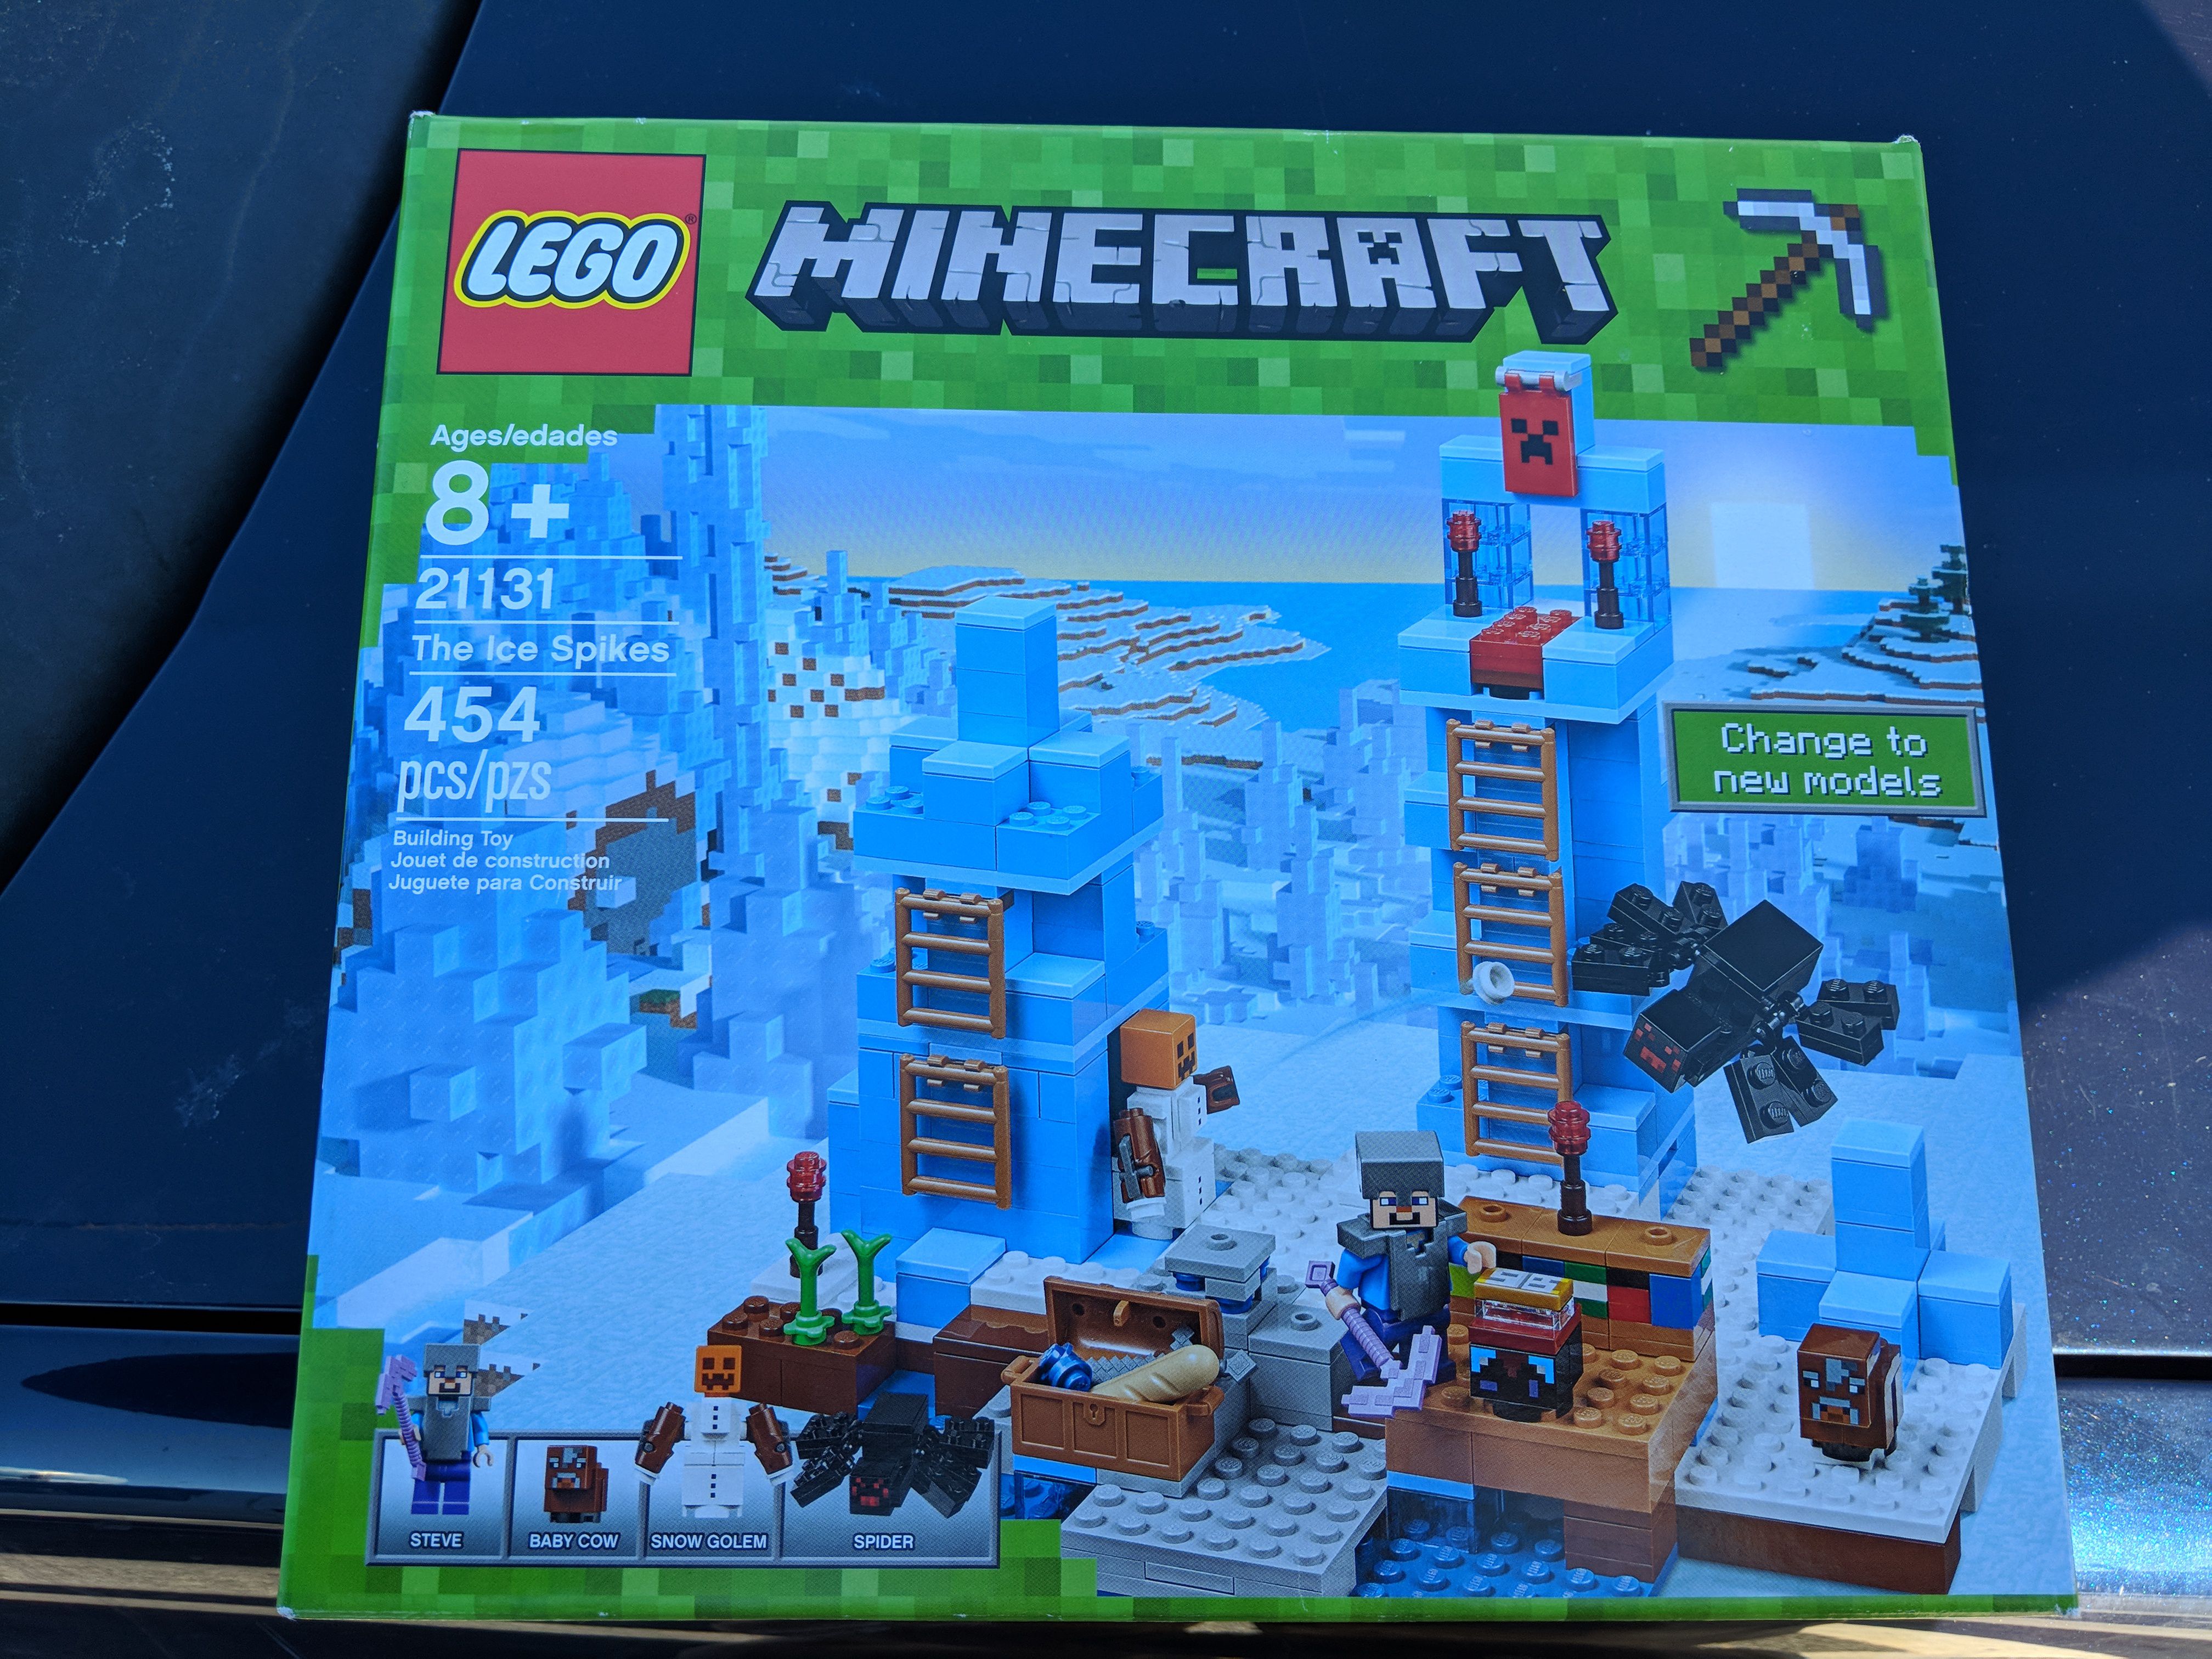 LEGO Minecraft Set 21131 - The Ice Spikes